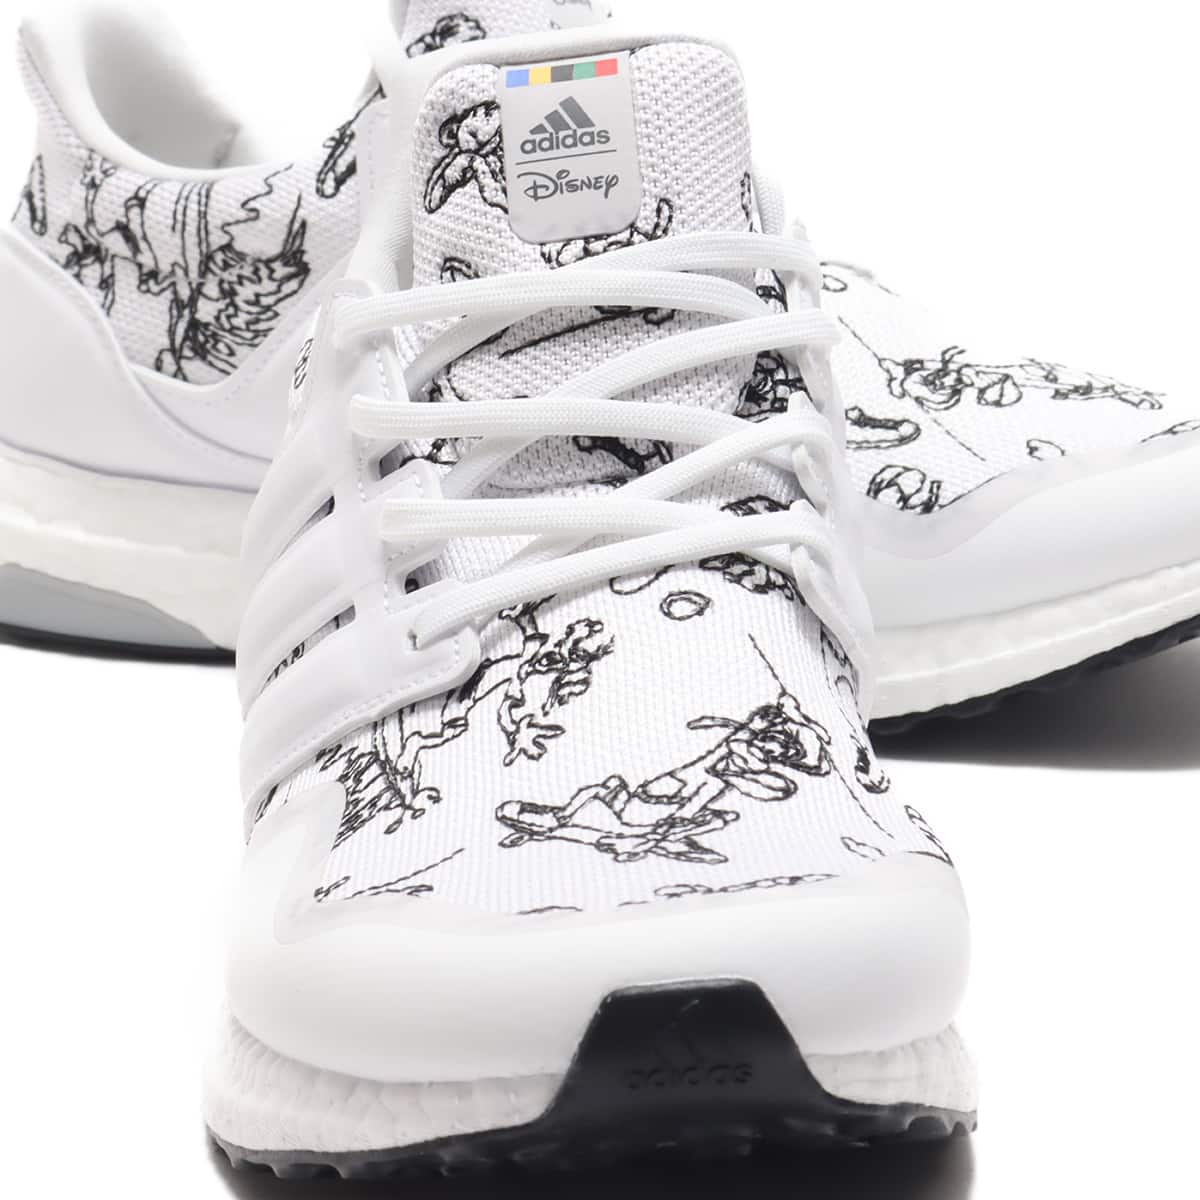 adidas ULTRABOOST DNA X DISNEY FOOTWEAR WHITE/FOOTWEAR WHITE/BLUE